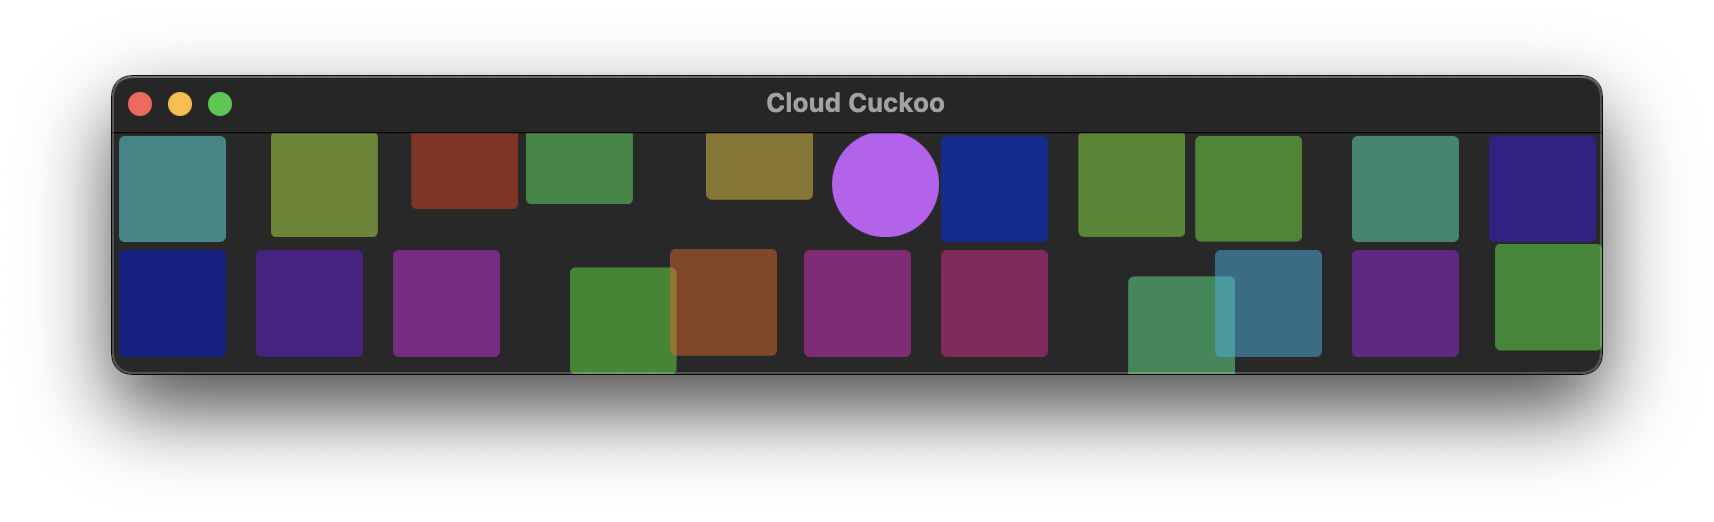 Cloud Cuckoo screen shot